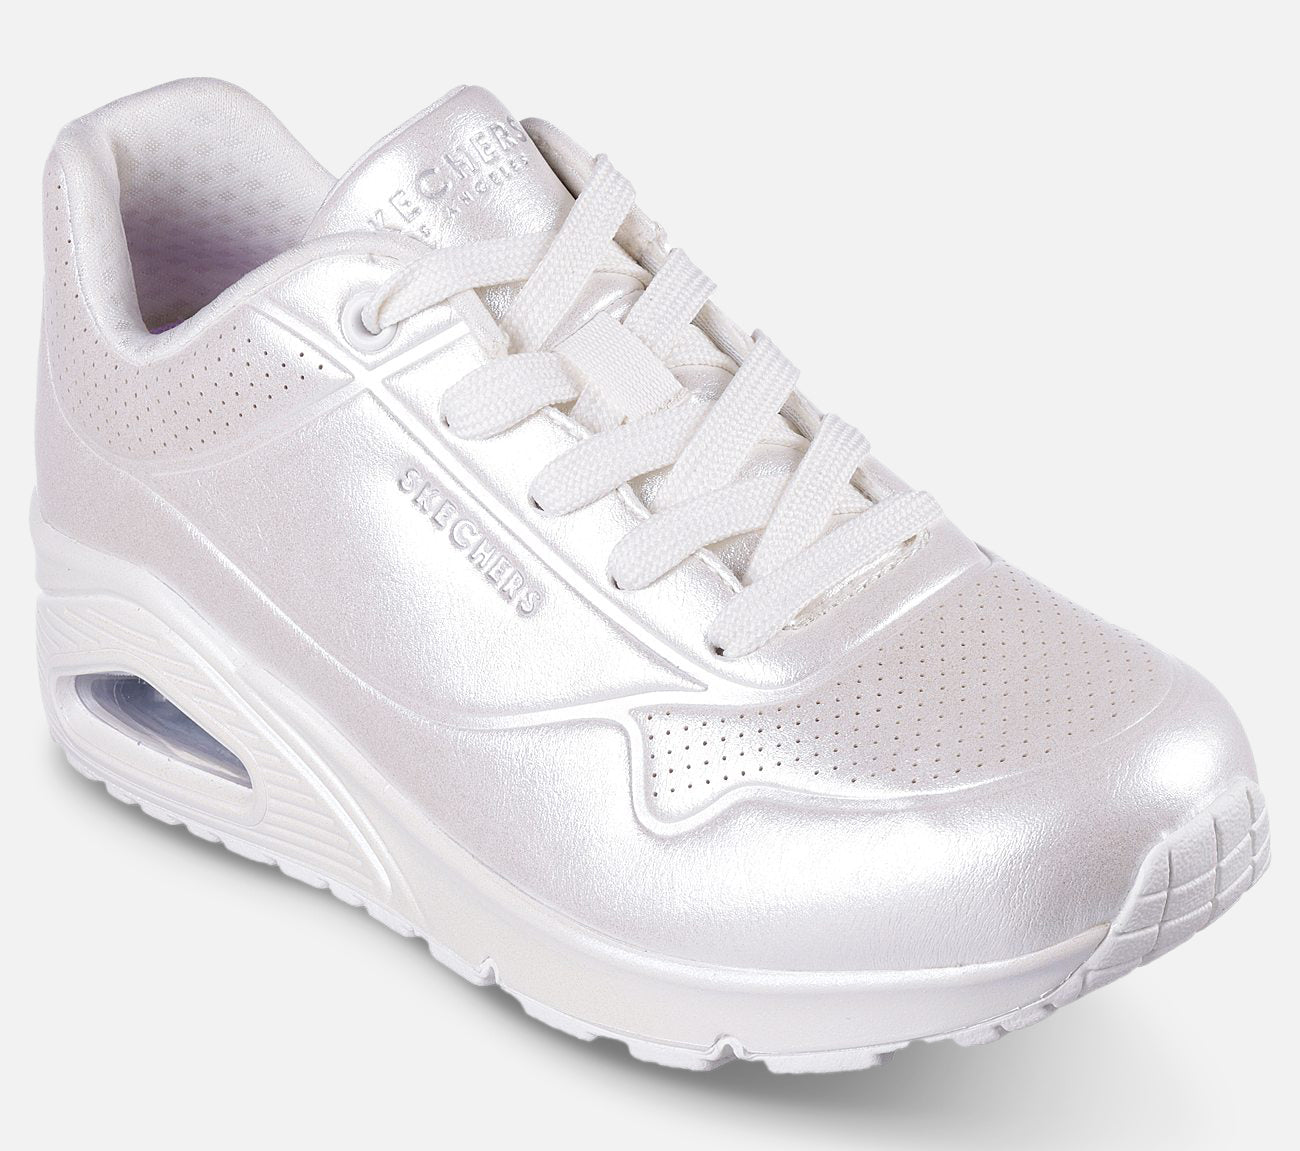 Uno - Pearl Princess Shoe Skechers